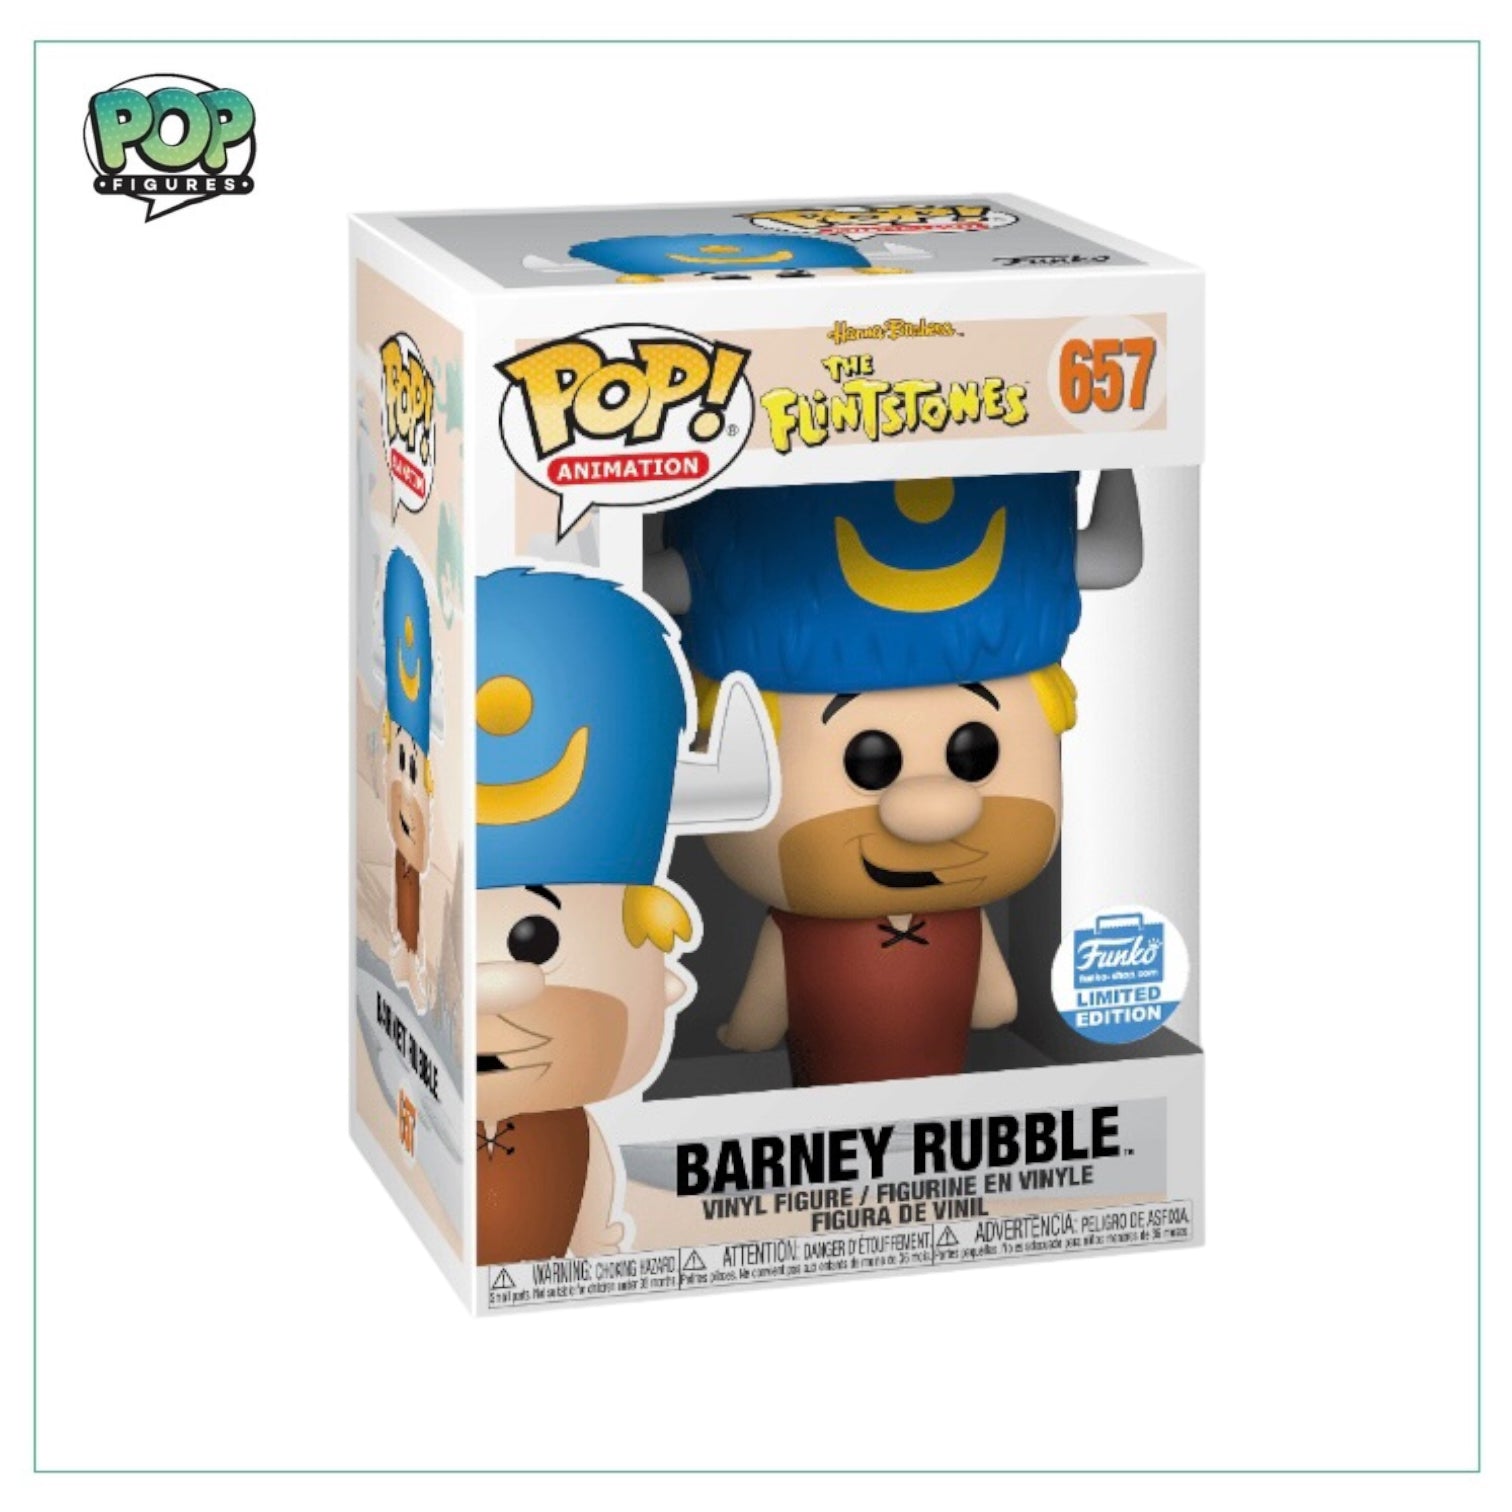 Barney Rubble #657 Funko Pop! - The Flintstones - Funko Shop Exclusive - 2019 Pop - Condition 9/10